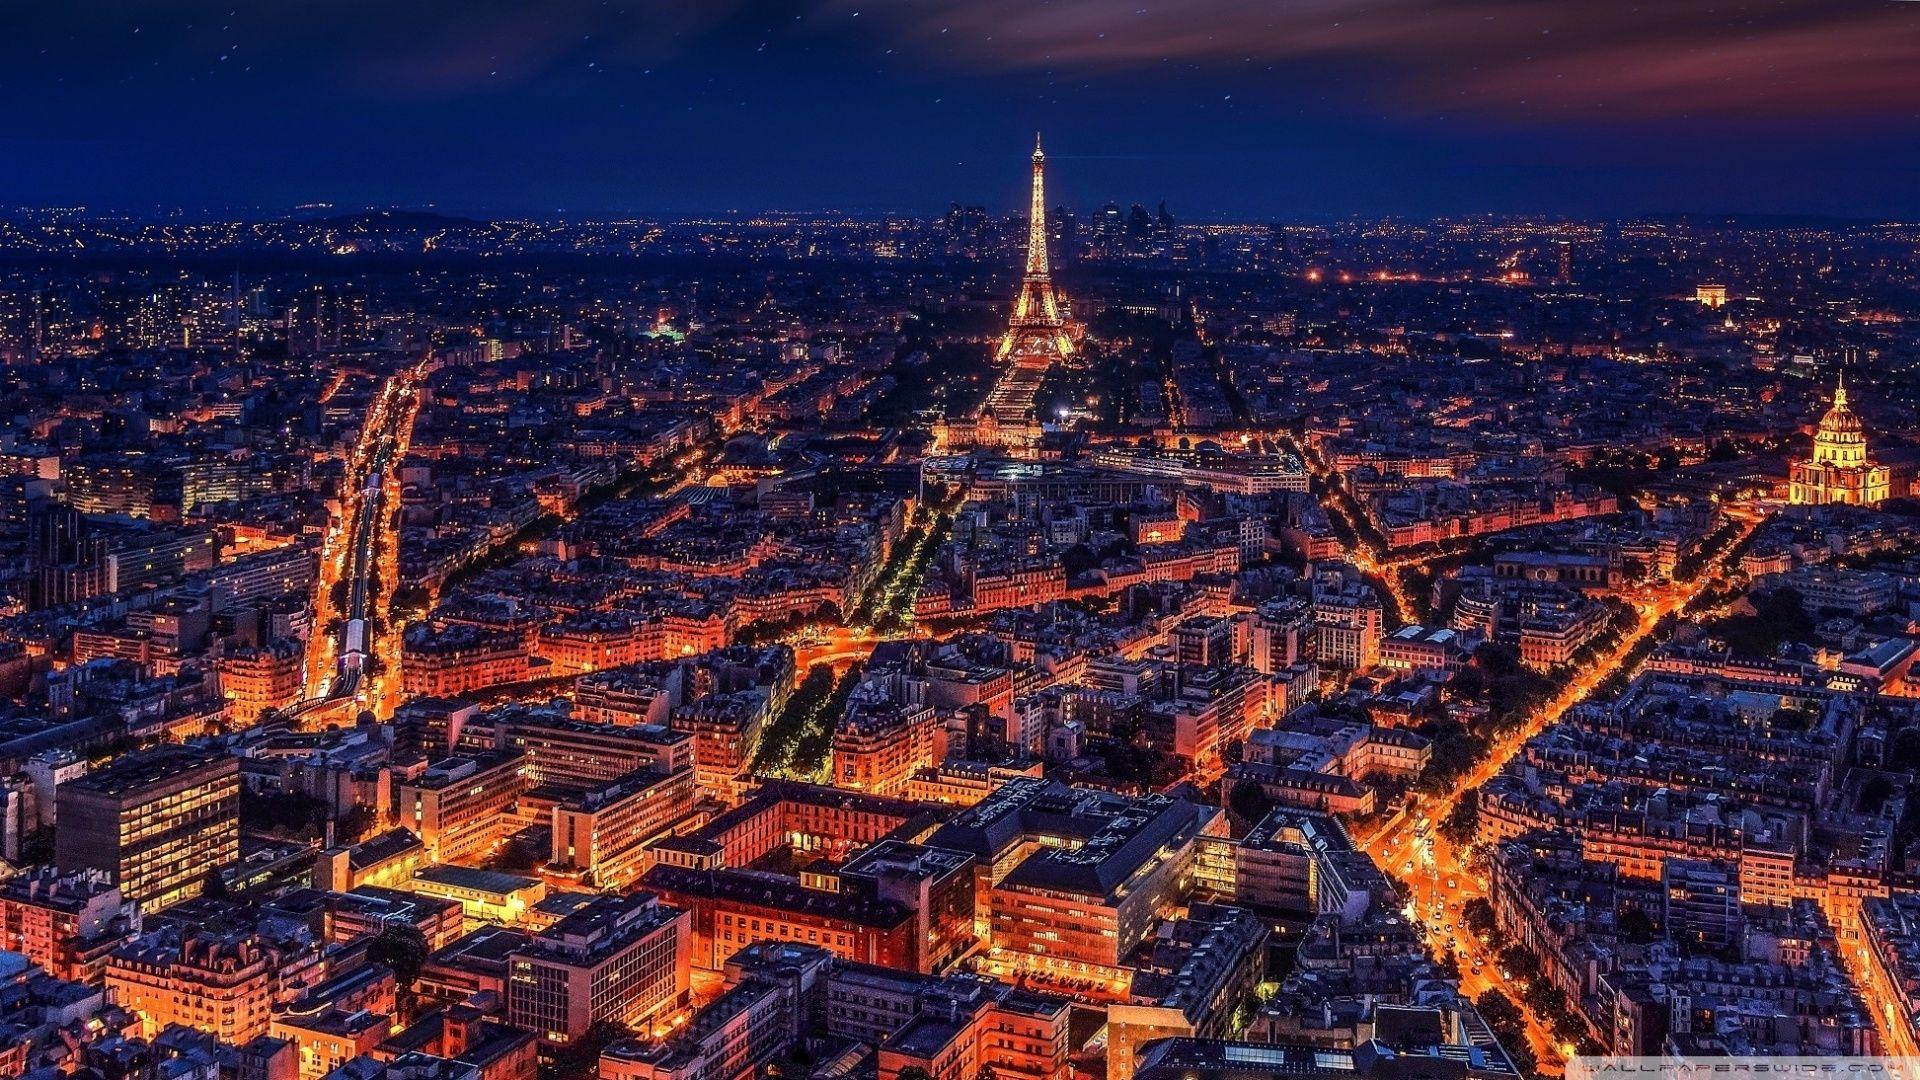 30k Paris Night Pictures  Download Free Images on Unsplash